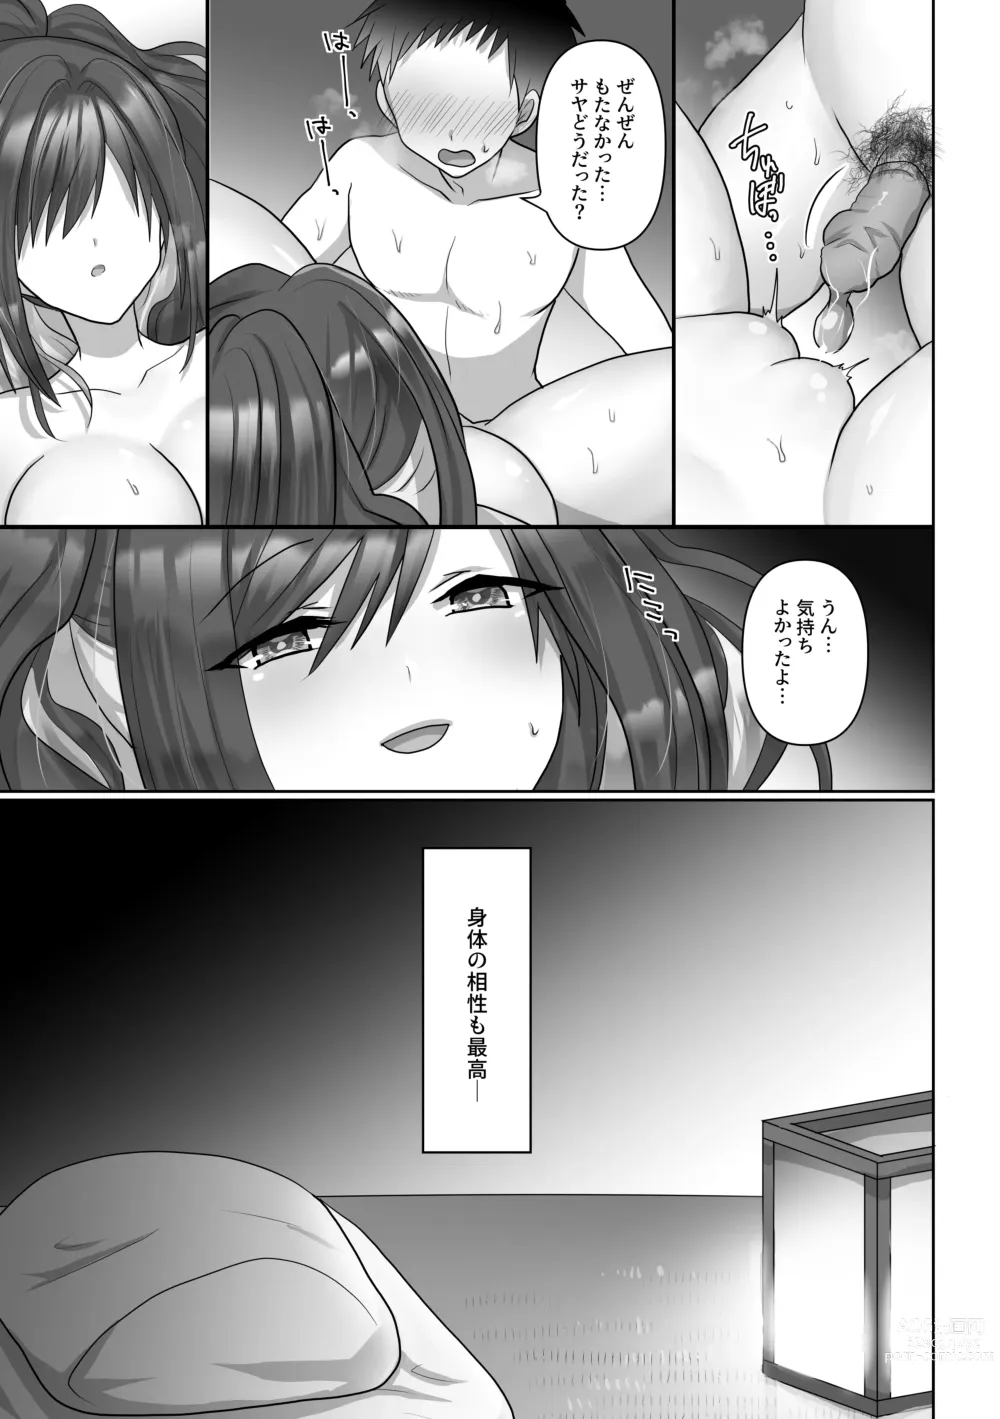 Page 11 of doujinshi Saya wa Modorazu